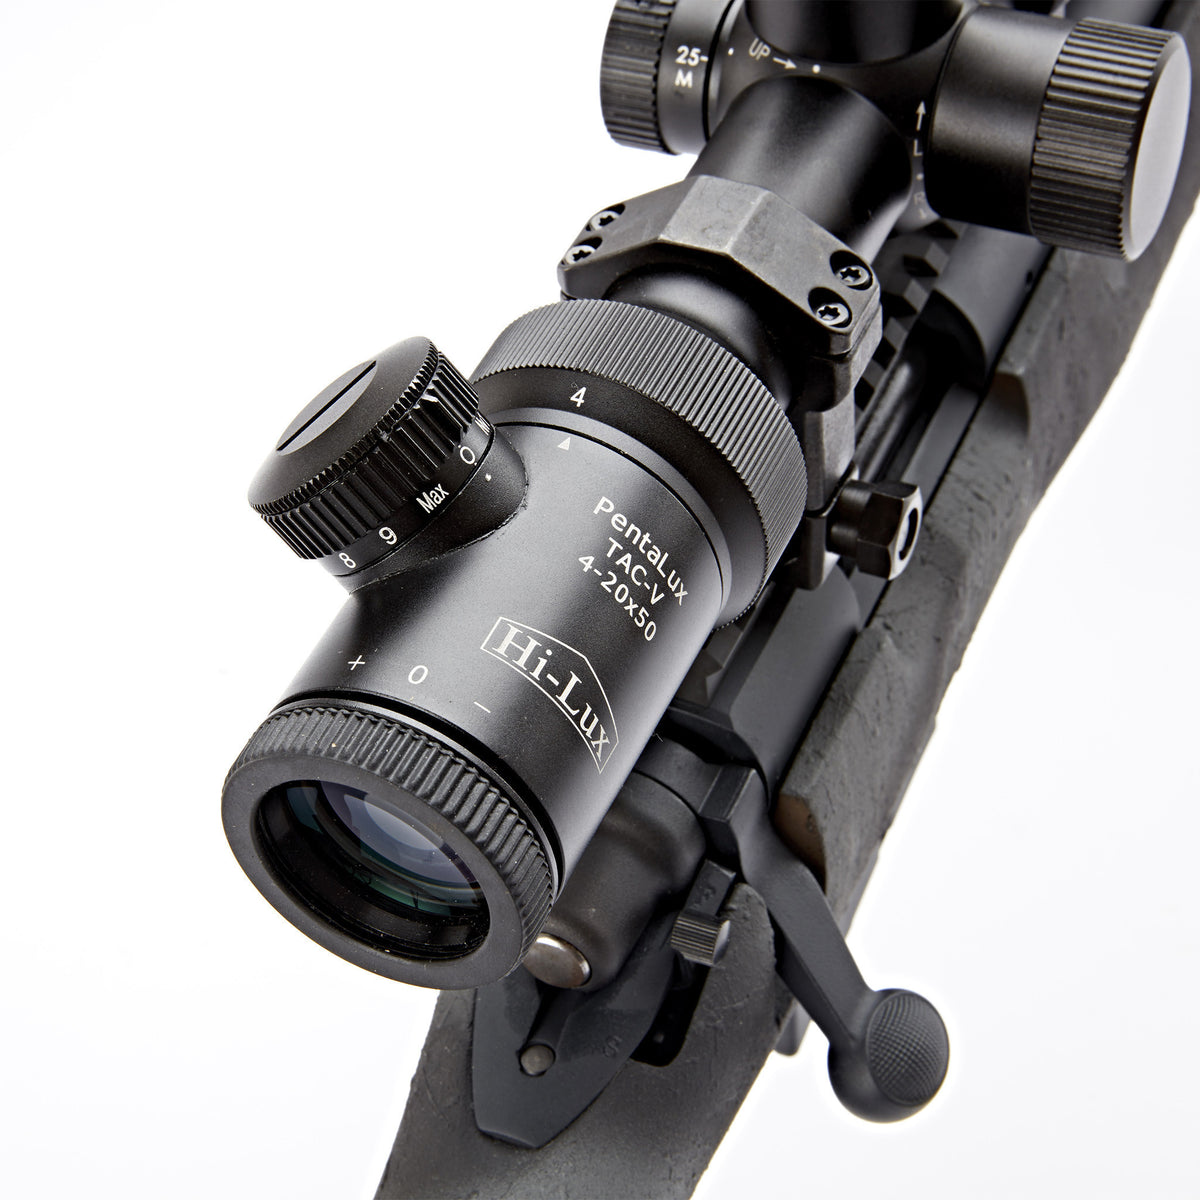 TAC-V420 EP mounted on TYR Bolt rifle